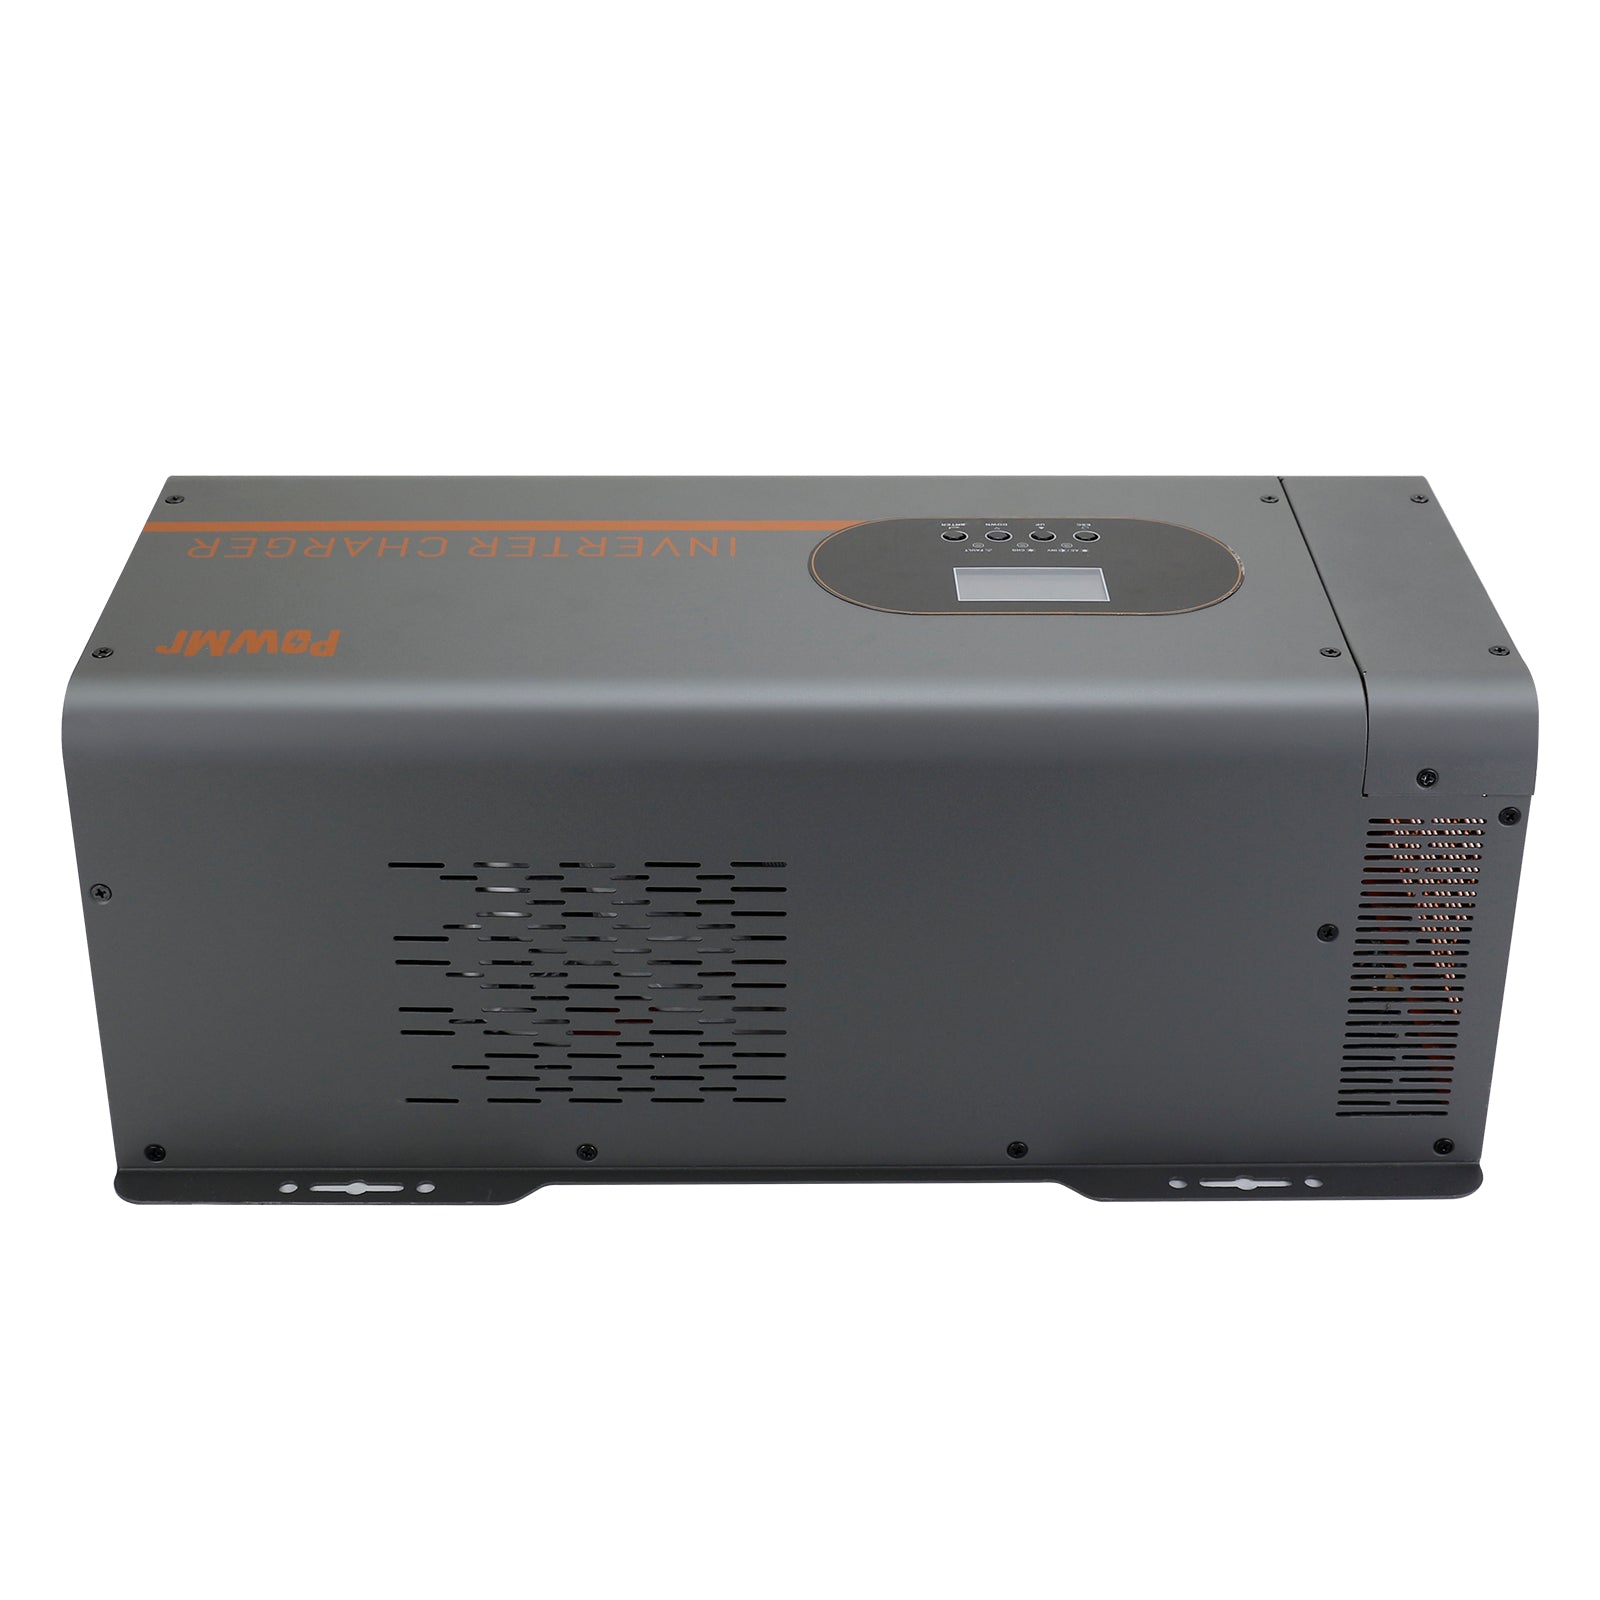 800W 220V Solar Grid VDE Micro Inverter – PowMr